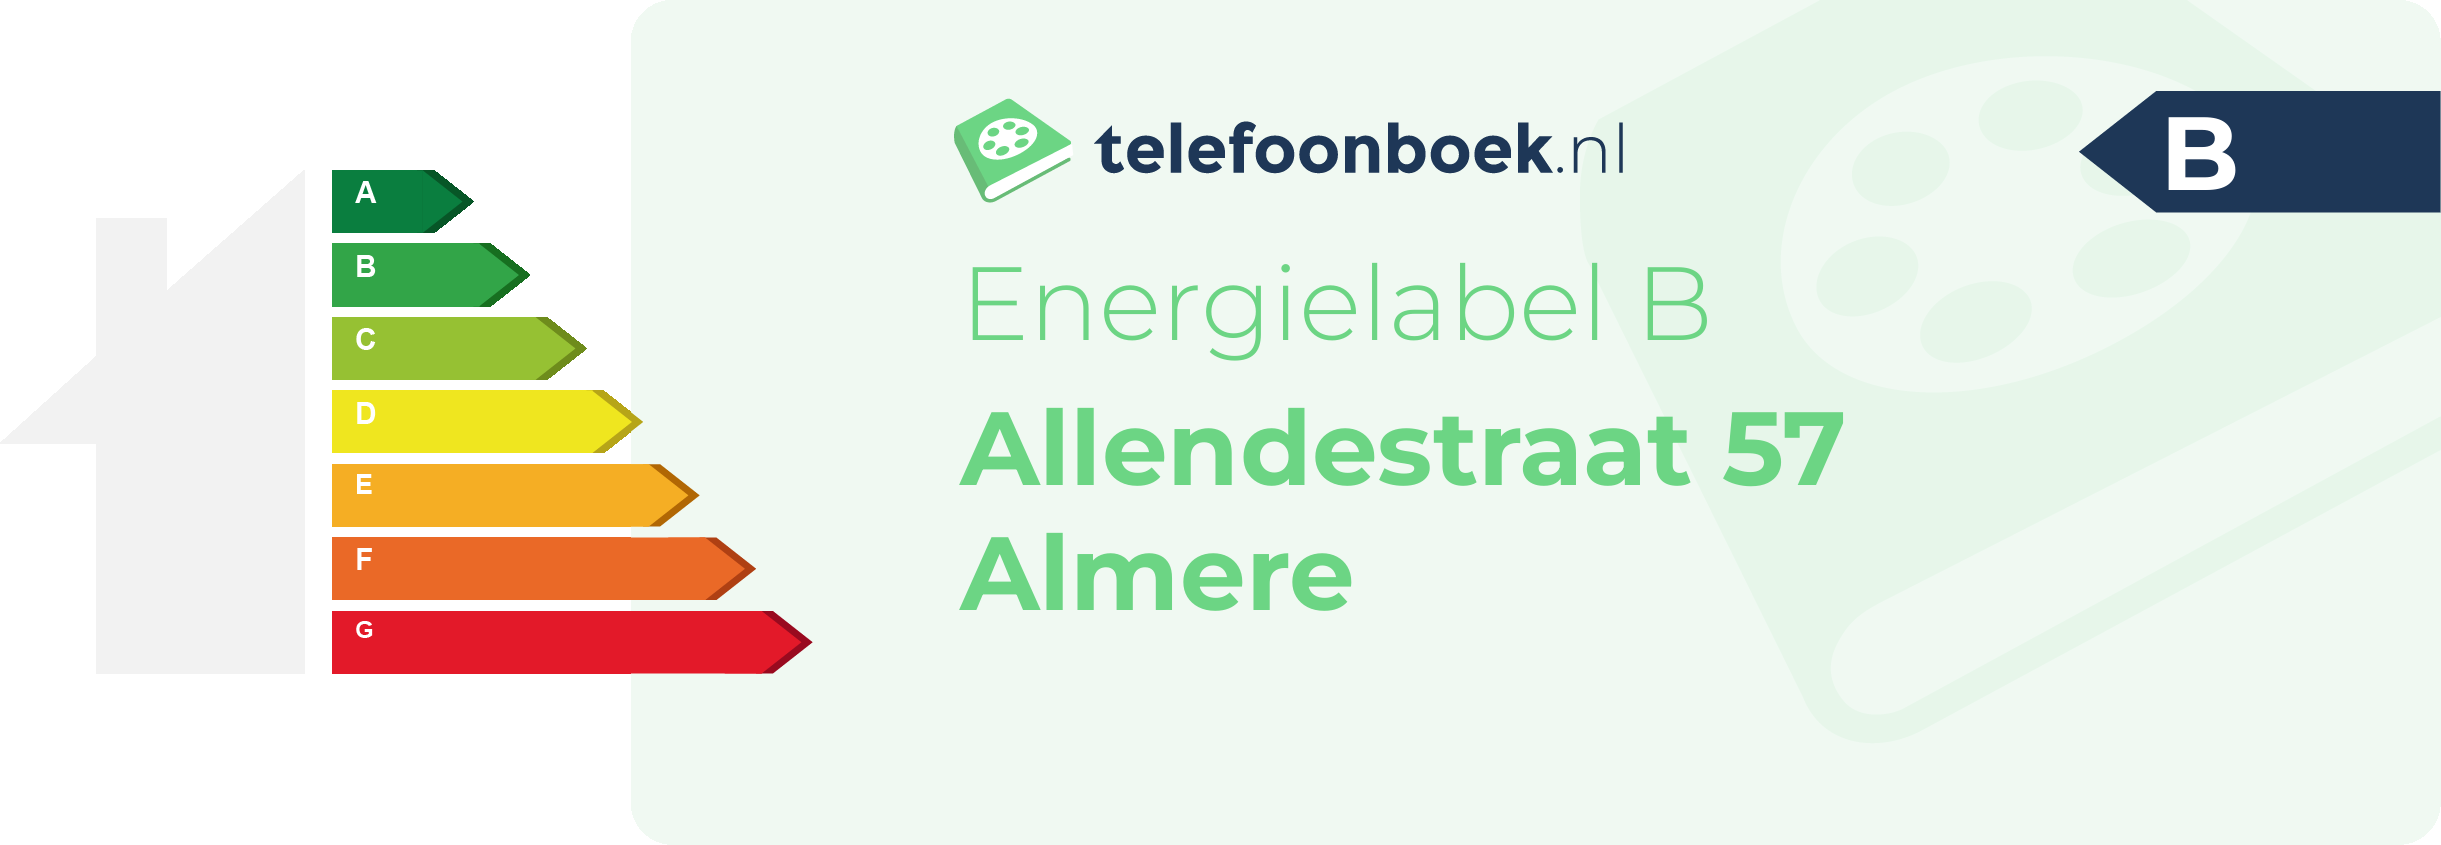 Energielabel Allendestraat 57 Almere